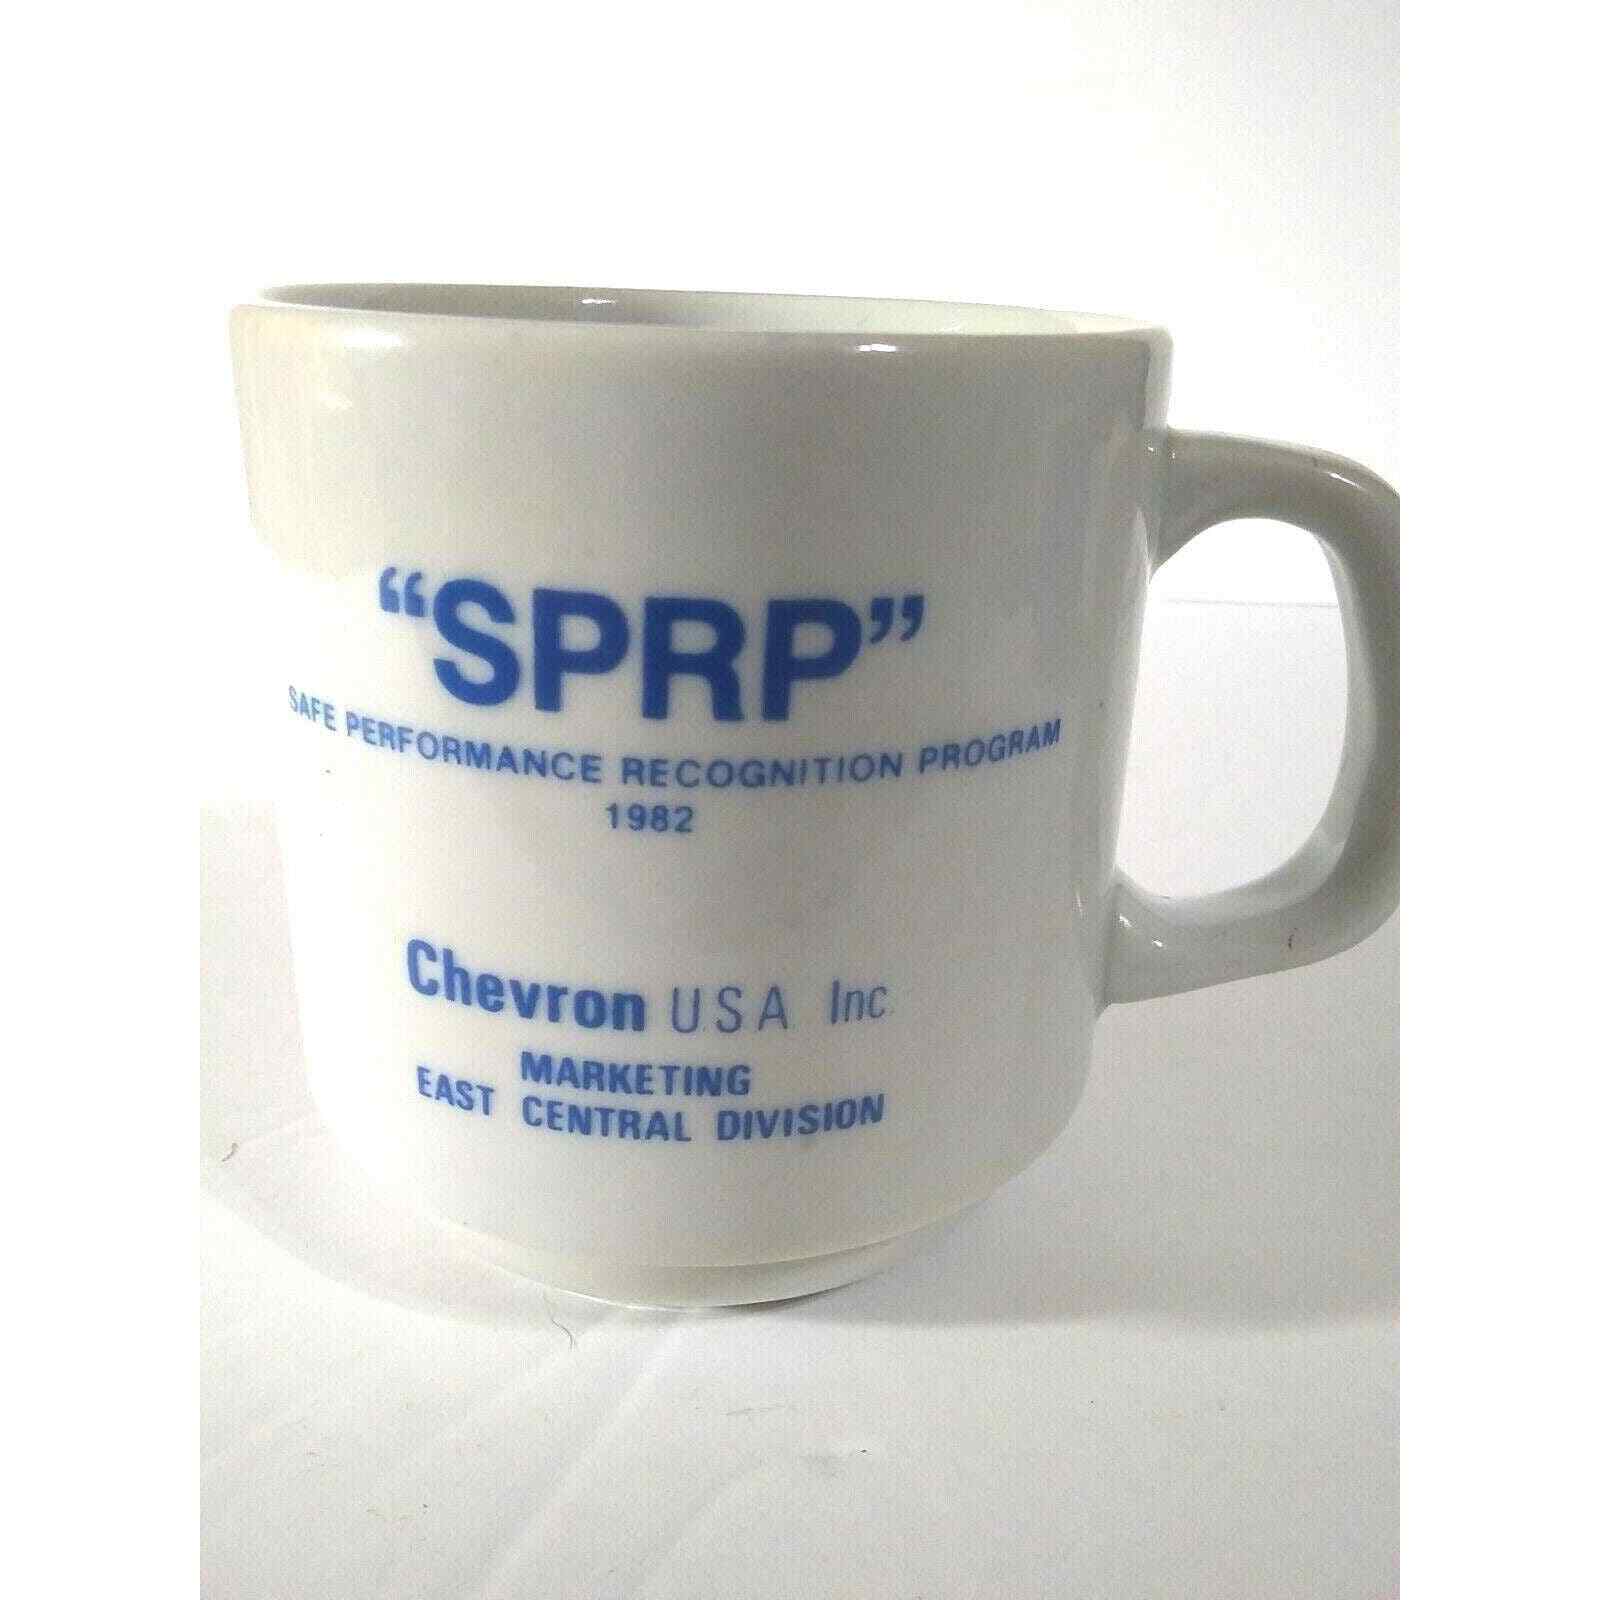 S P R P 1982 Chevron U S A Safe Performance Recognition Program Coffee Cup Mug